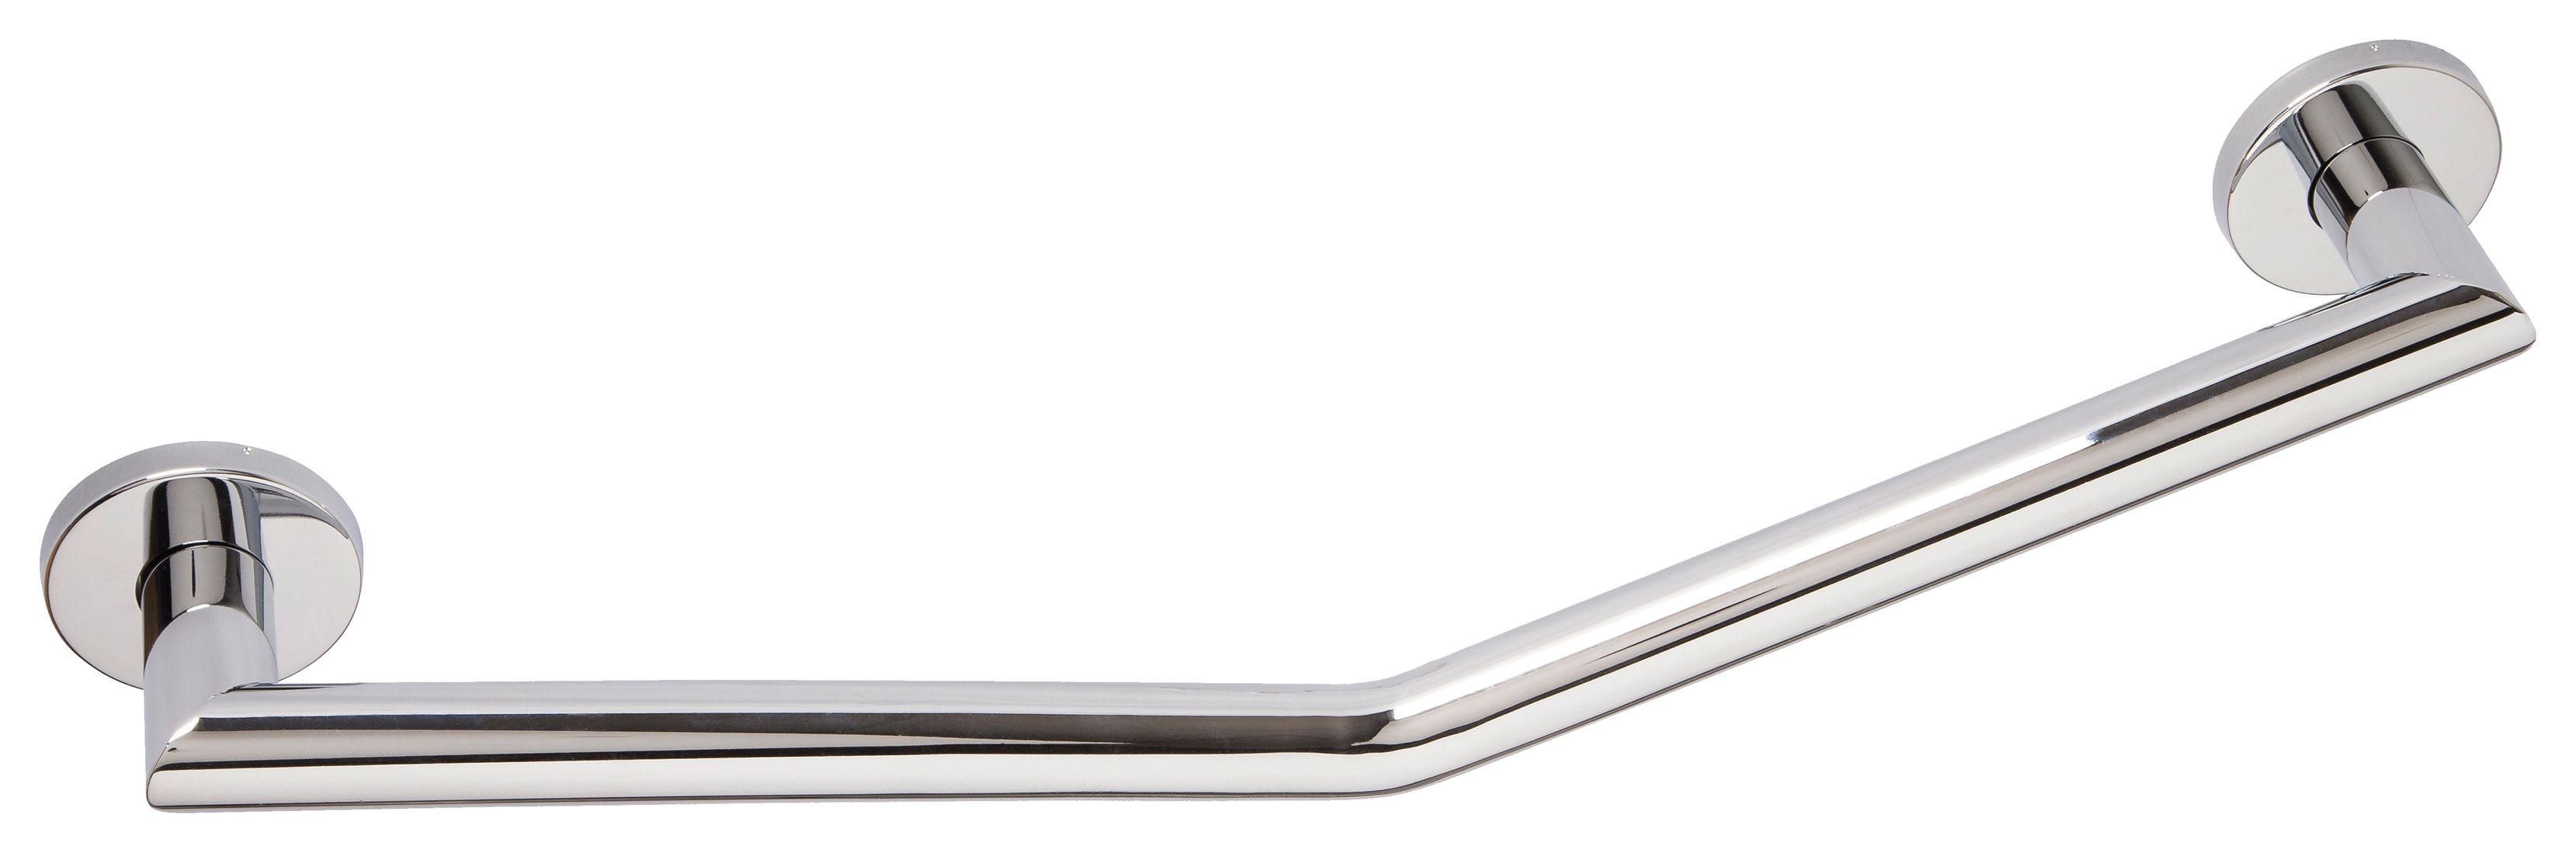 Croydex Angled Chrome Grab Bar - 600mm